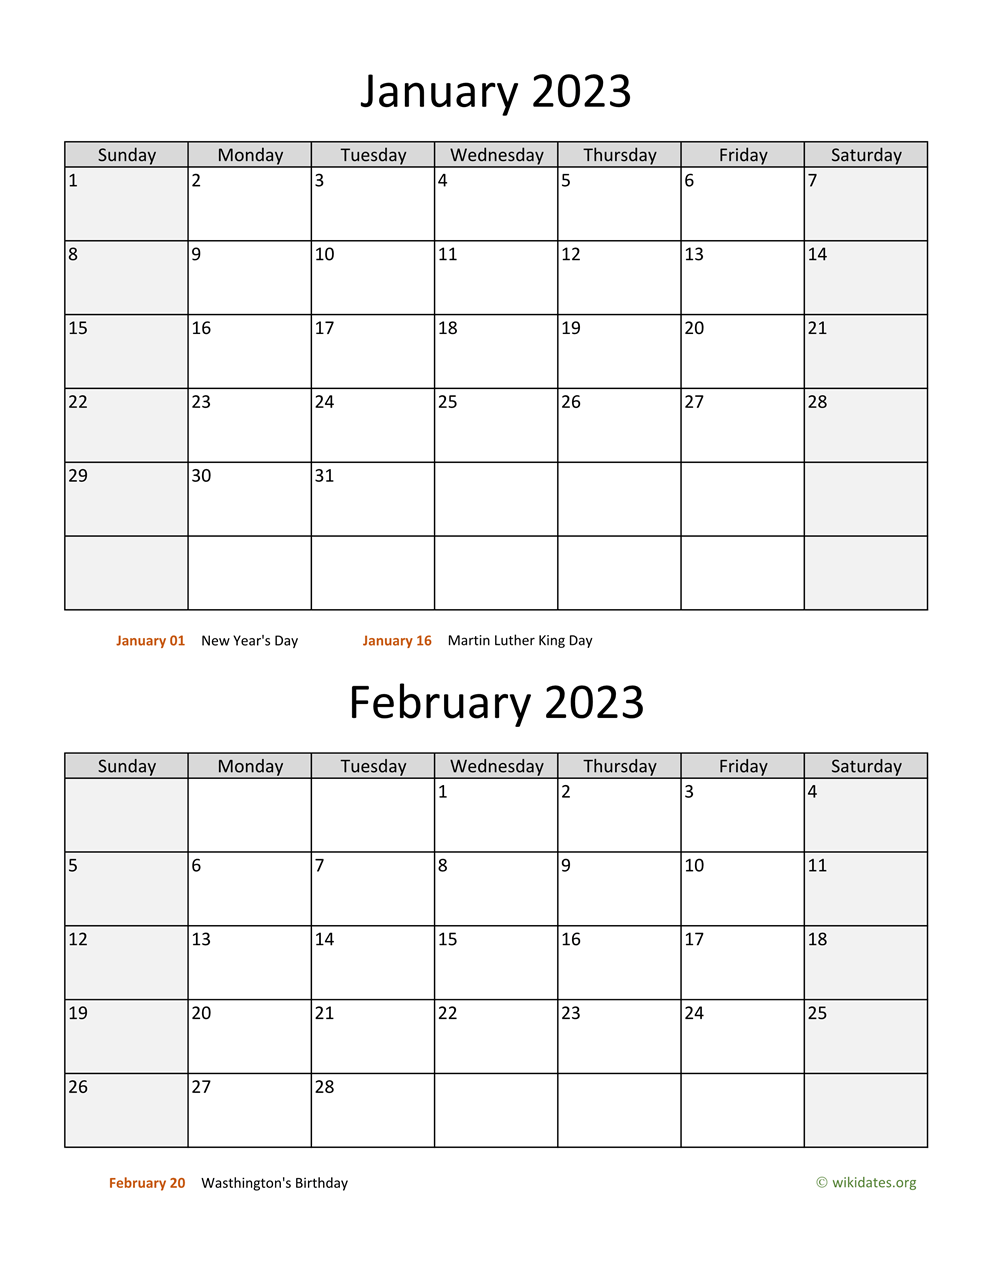 January And February 2023 Calendar WikiDates